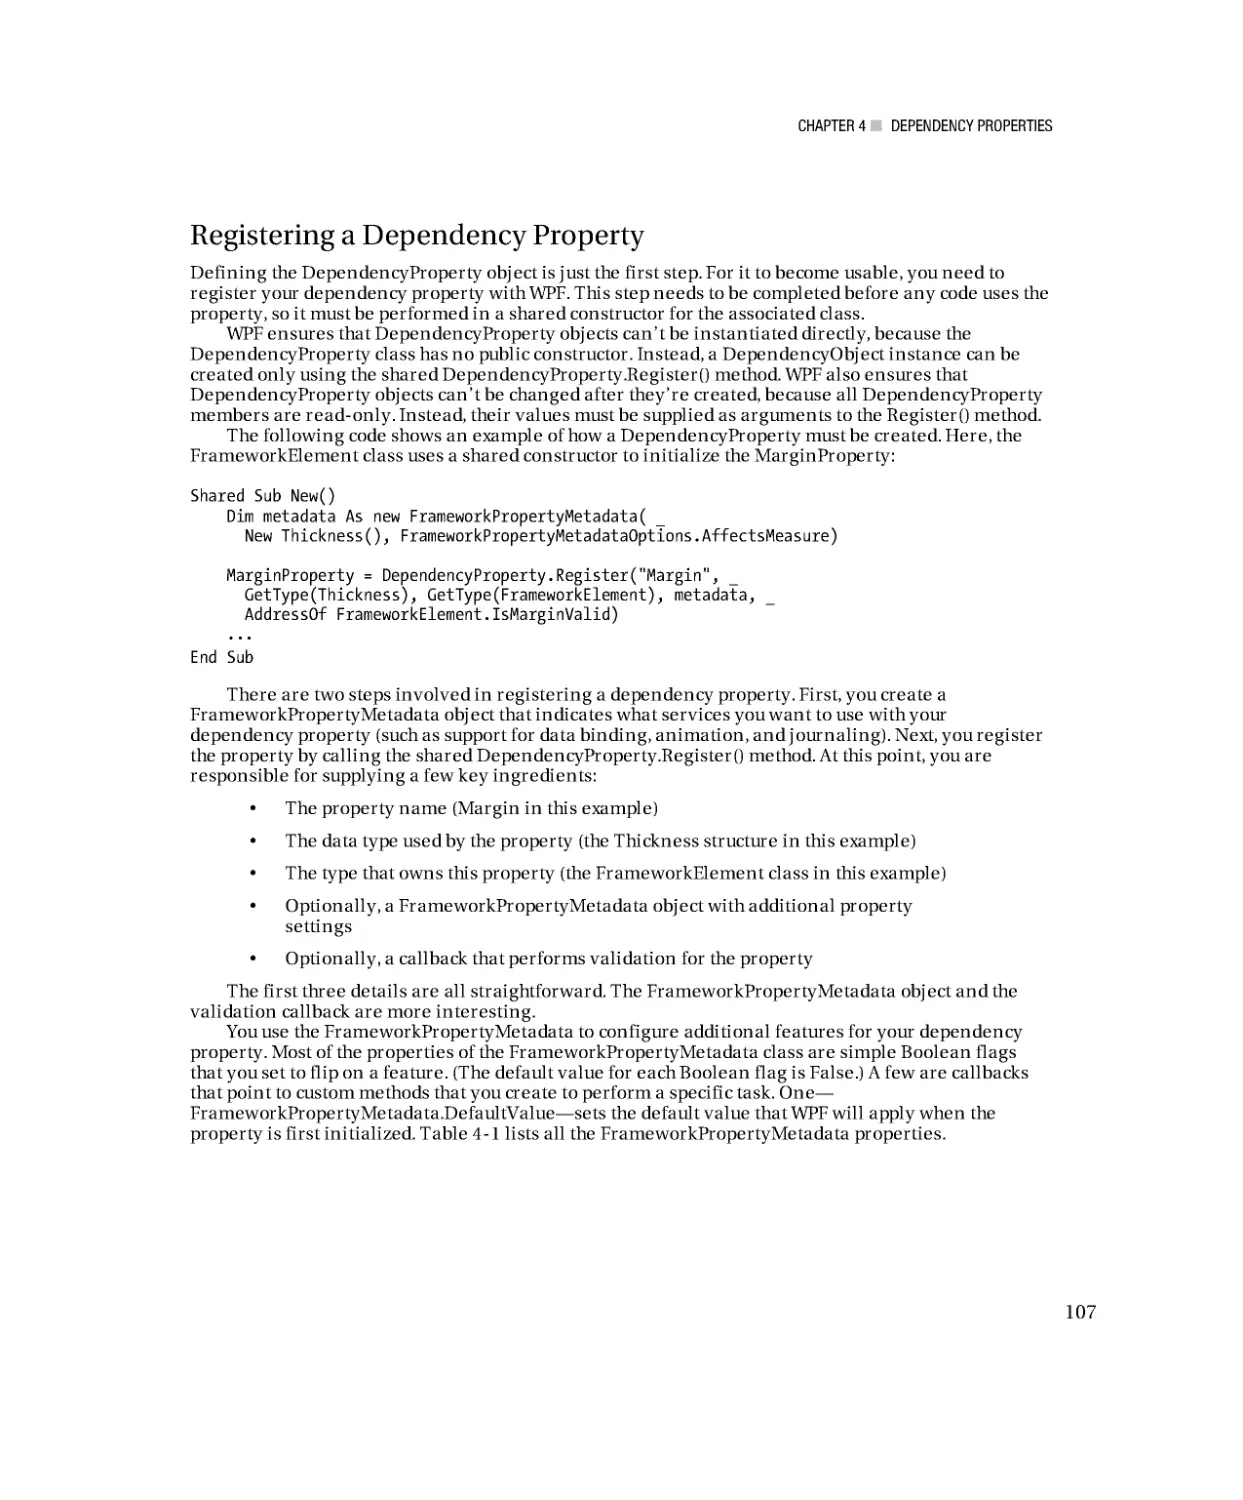 Registering a Dependency Property